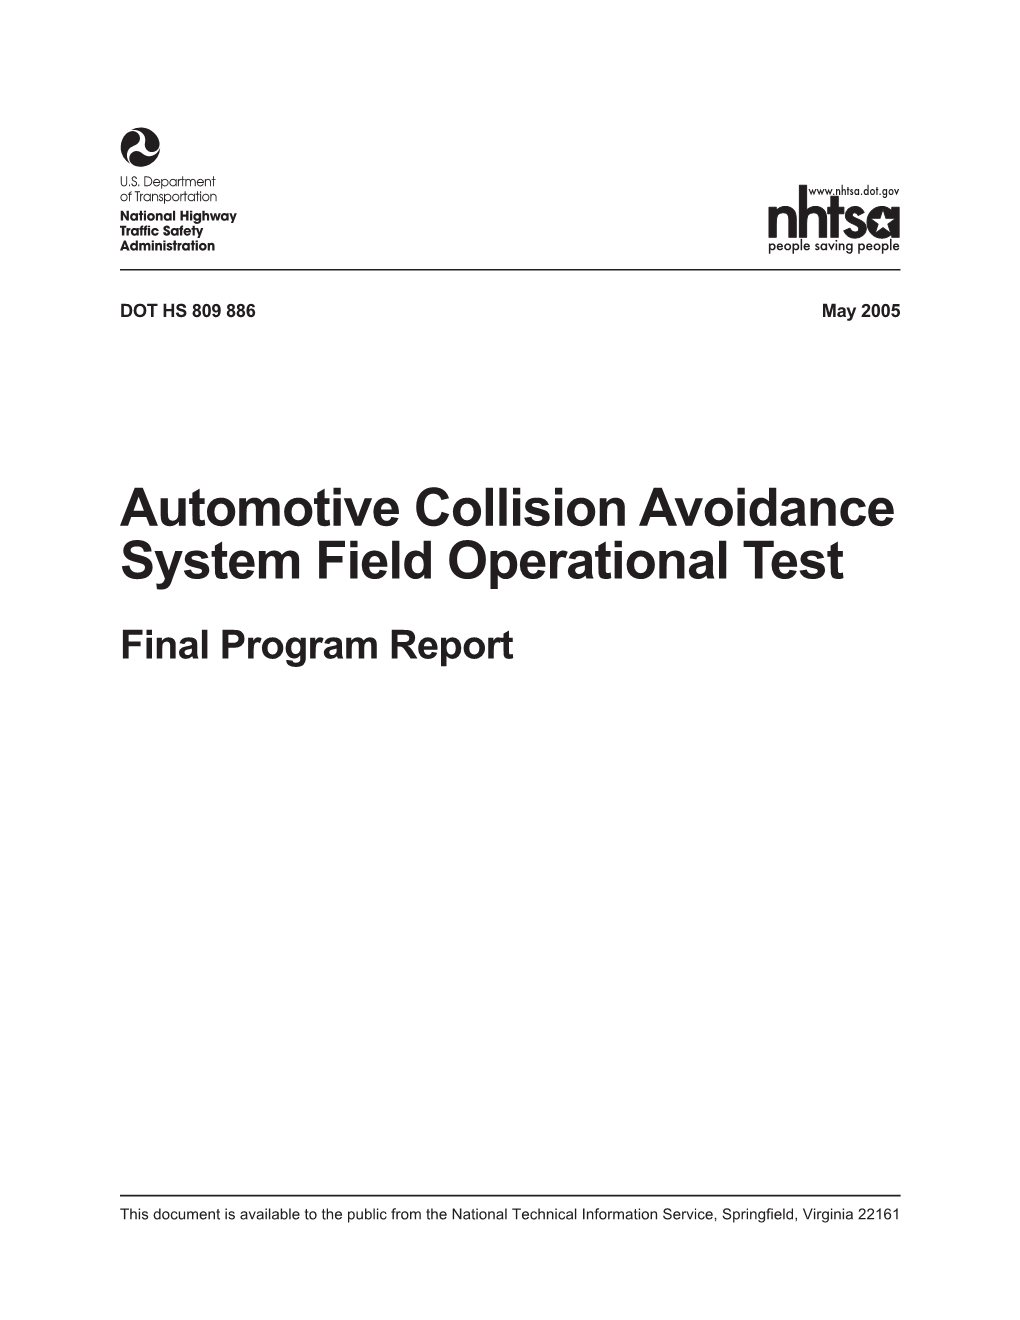 Automotive Collision Avoidance System Field Operational Test Final Program Report